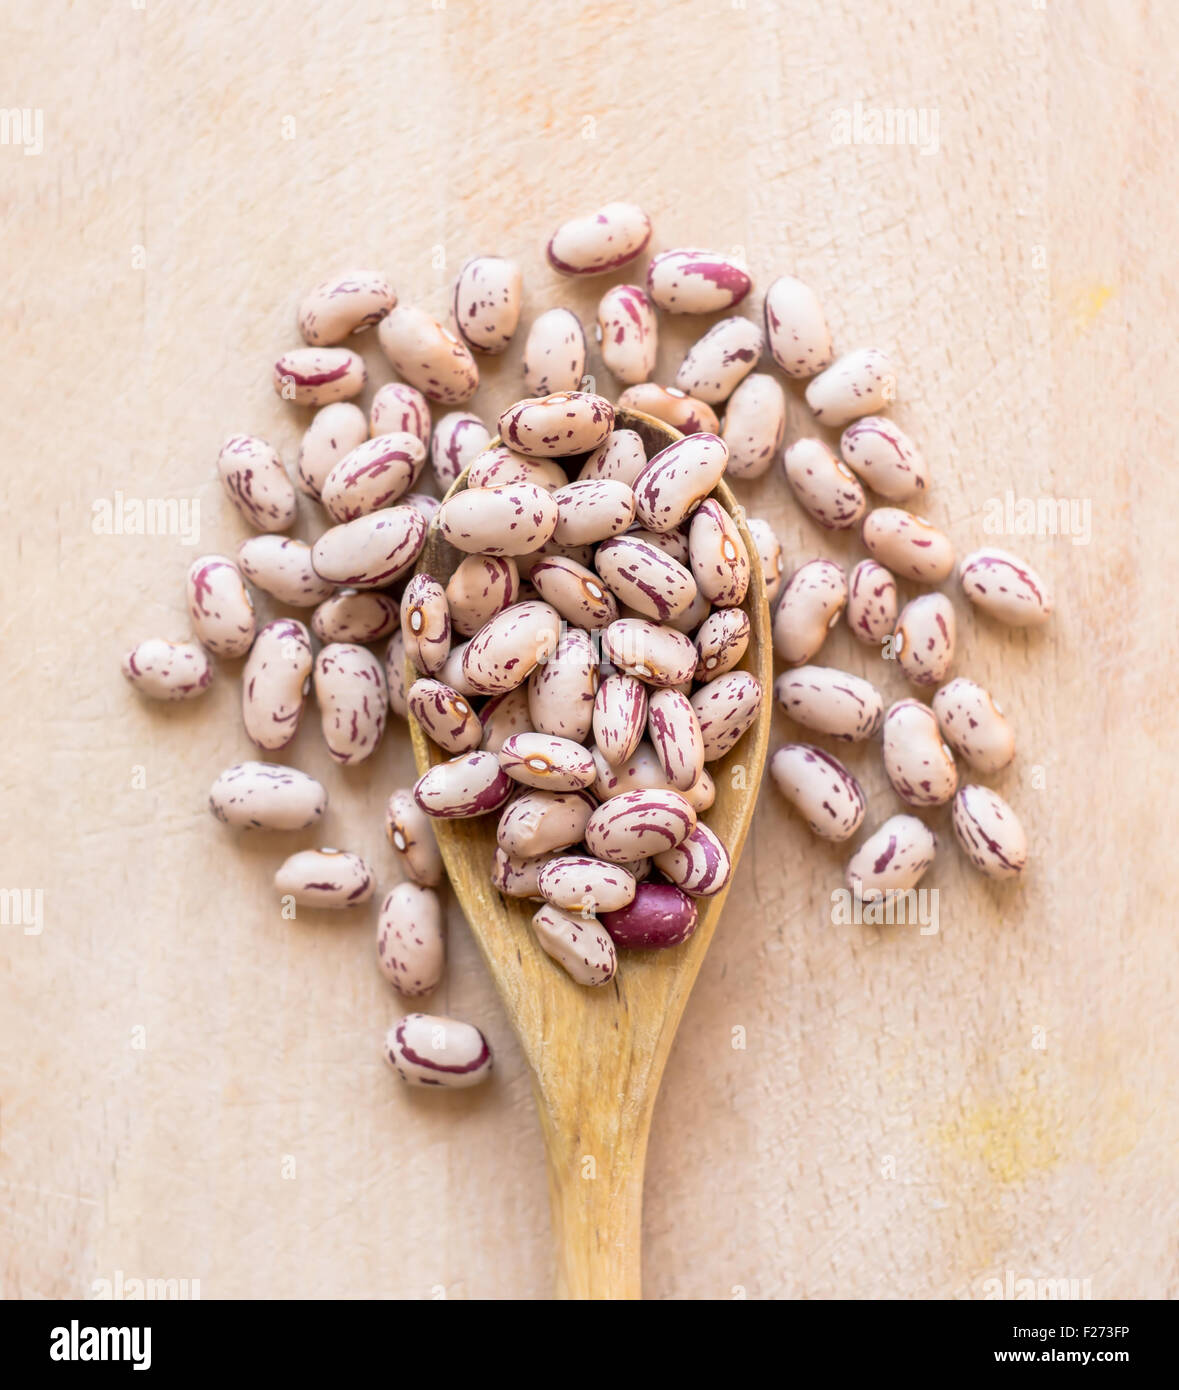 Pinto beans, gourmet cooking preparation, lifestyle image Stock Photo